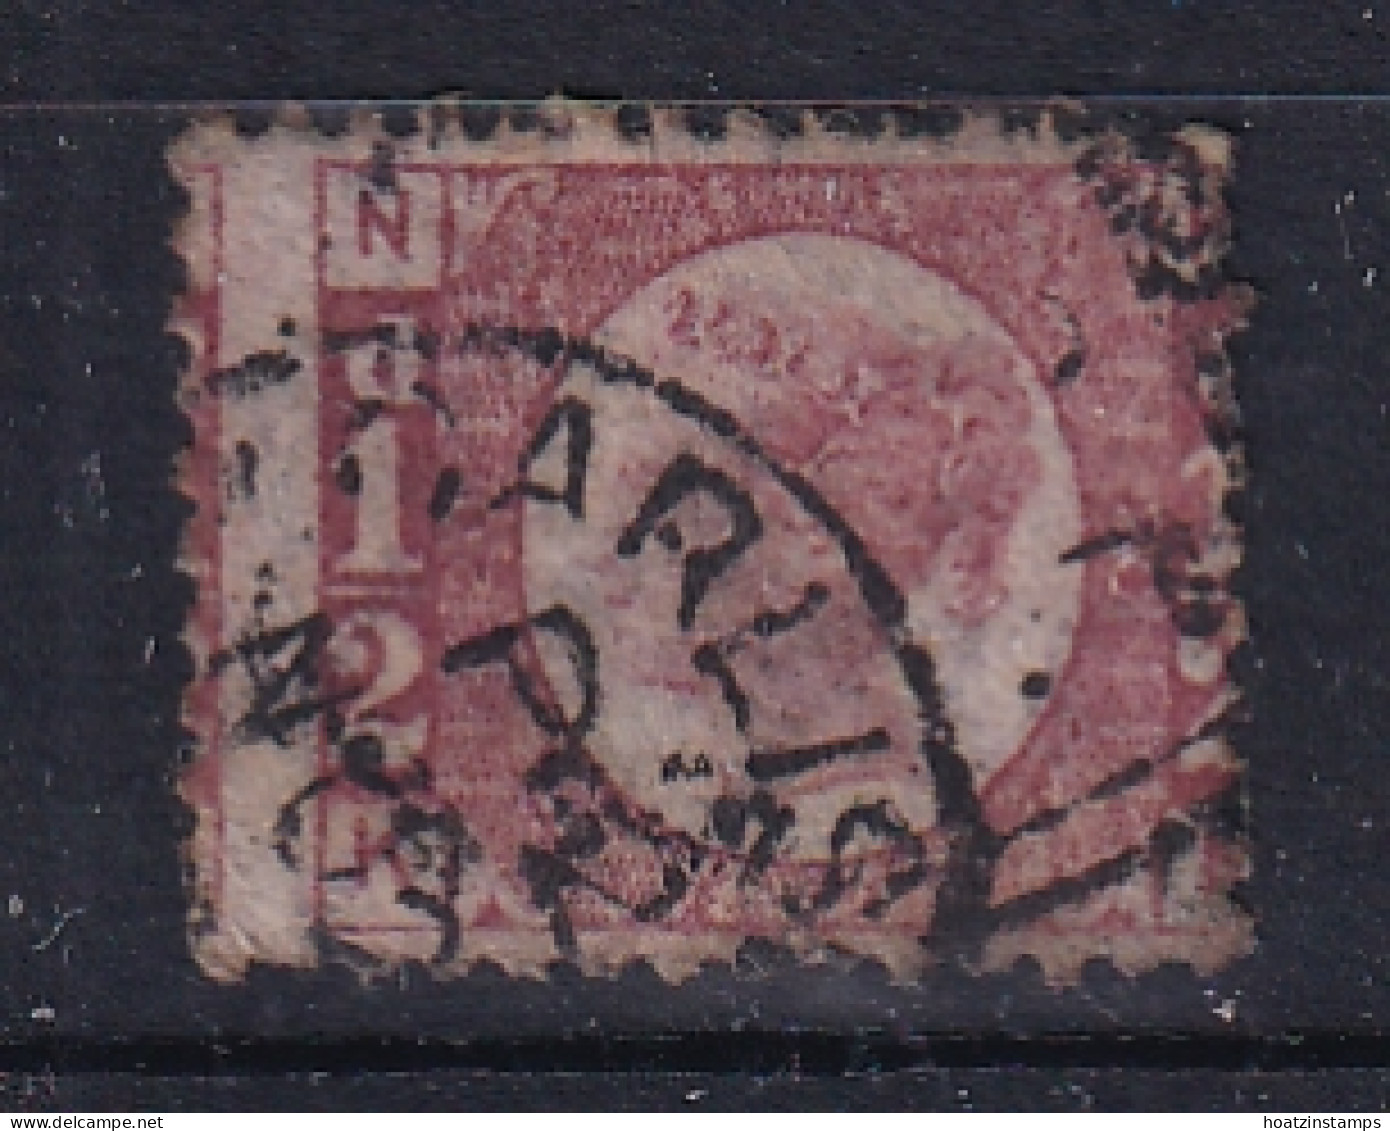 G.B.: 1870/79   QV   ½d    [Plate 20]   Used - Usati